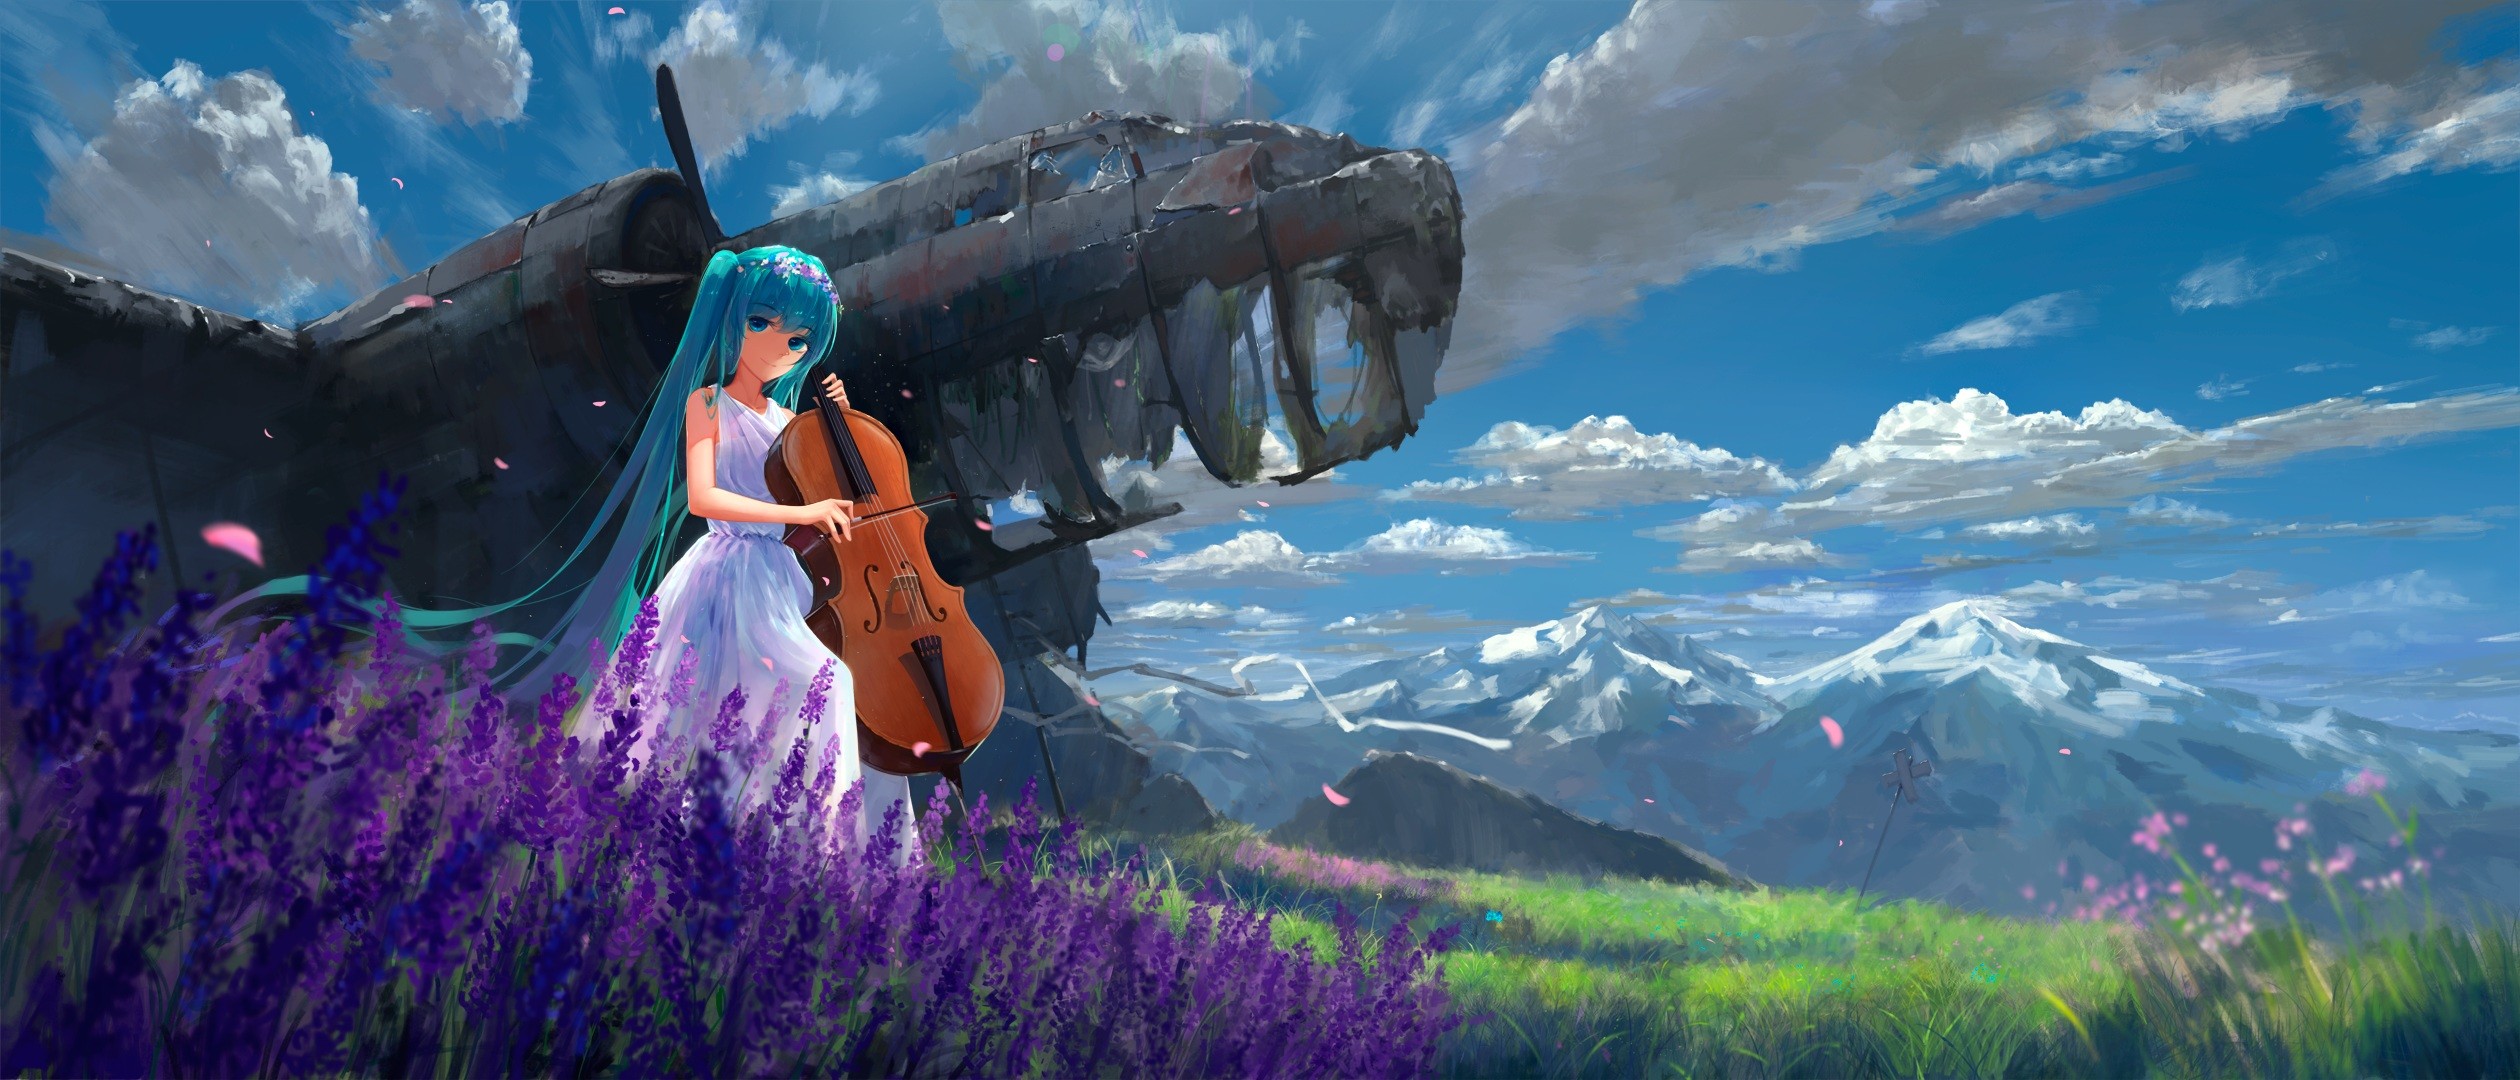 Anime 2520x1080 anime anime girls Vocaloid Hatsune Miku sky musical instrument cello women outdoors landscape aircraft vehicle wreck long hair music